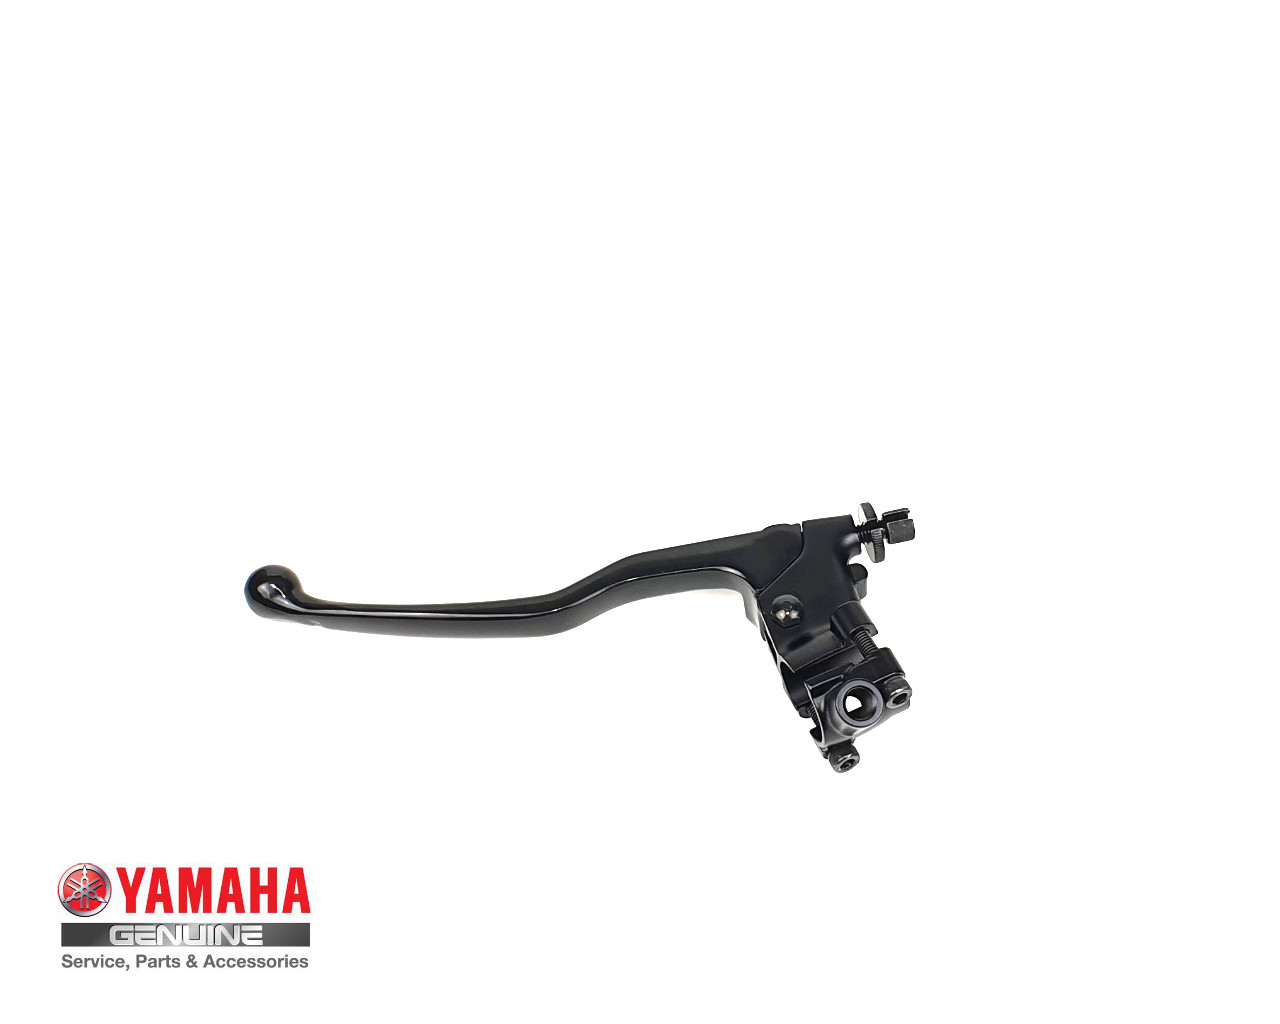 Yamaha MT 125 MT 125 ABS  "Fussbremshebel" Original Yamaha Ersatzteile